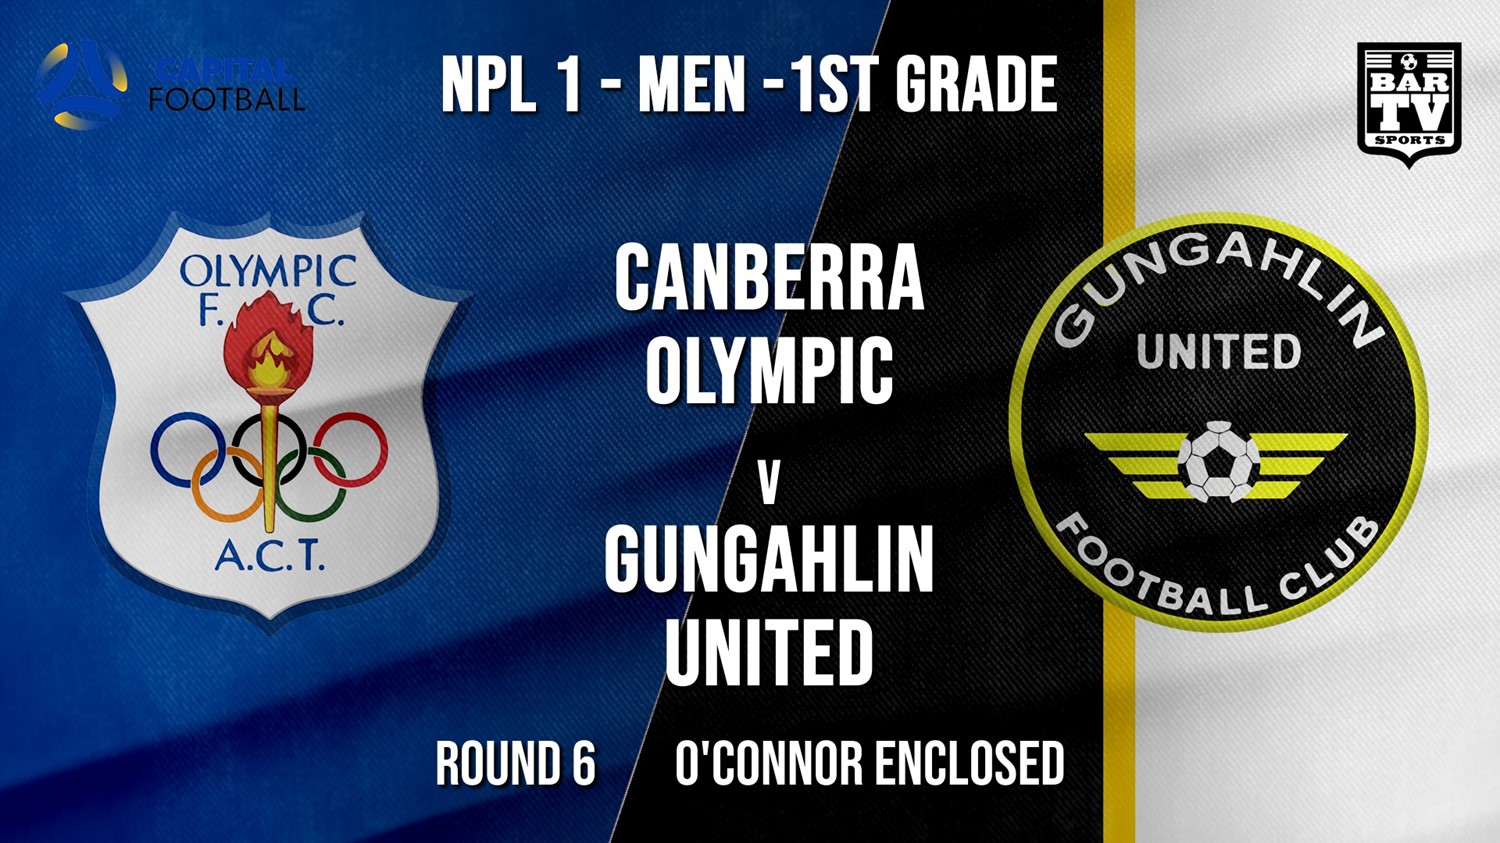 NPL - CAPITAL Round 6 - Canberra Olympic FC v Gungahlin United FC Minigame Slate Image